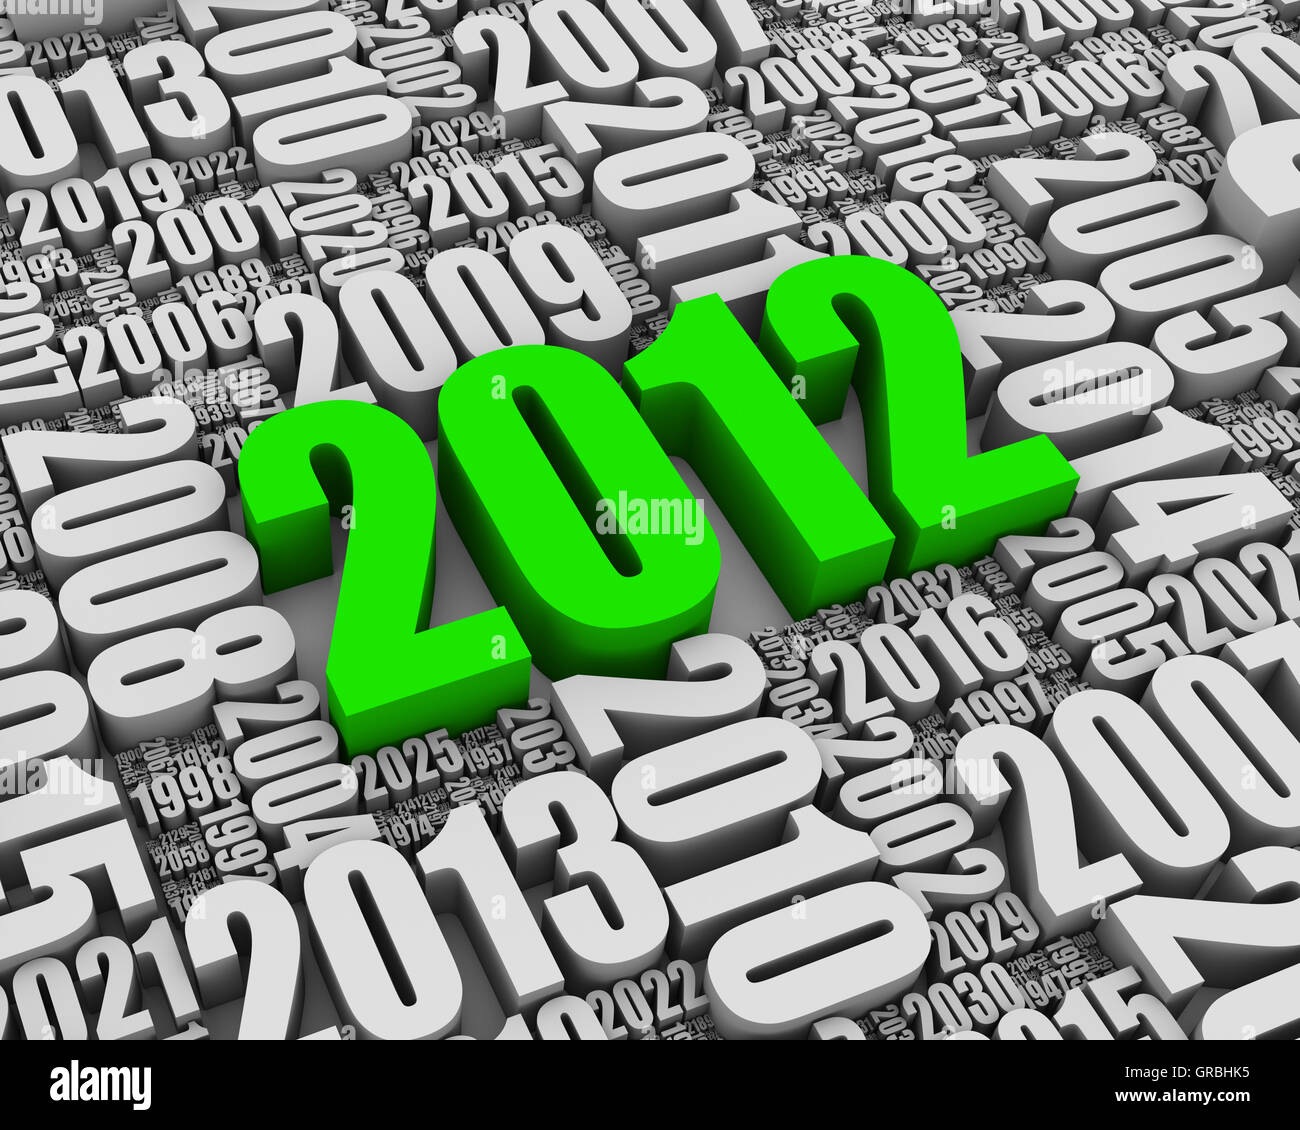 Year 2012 AD Stock Photo